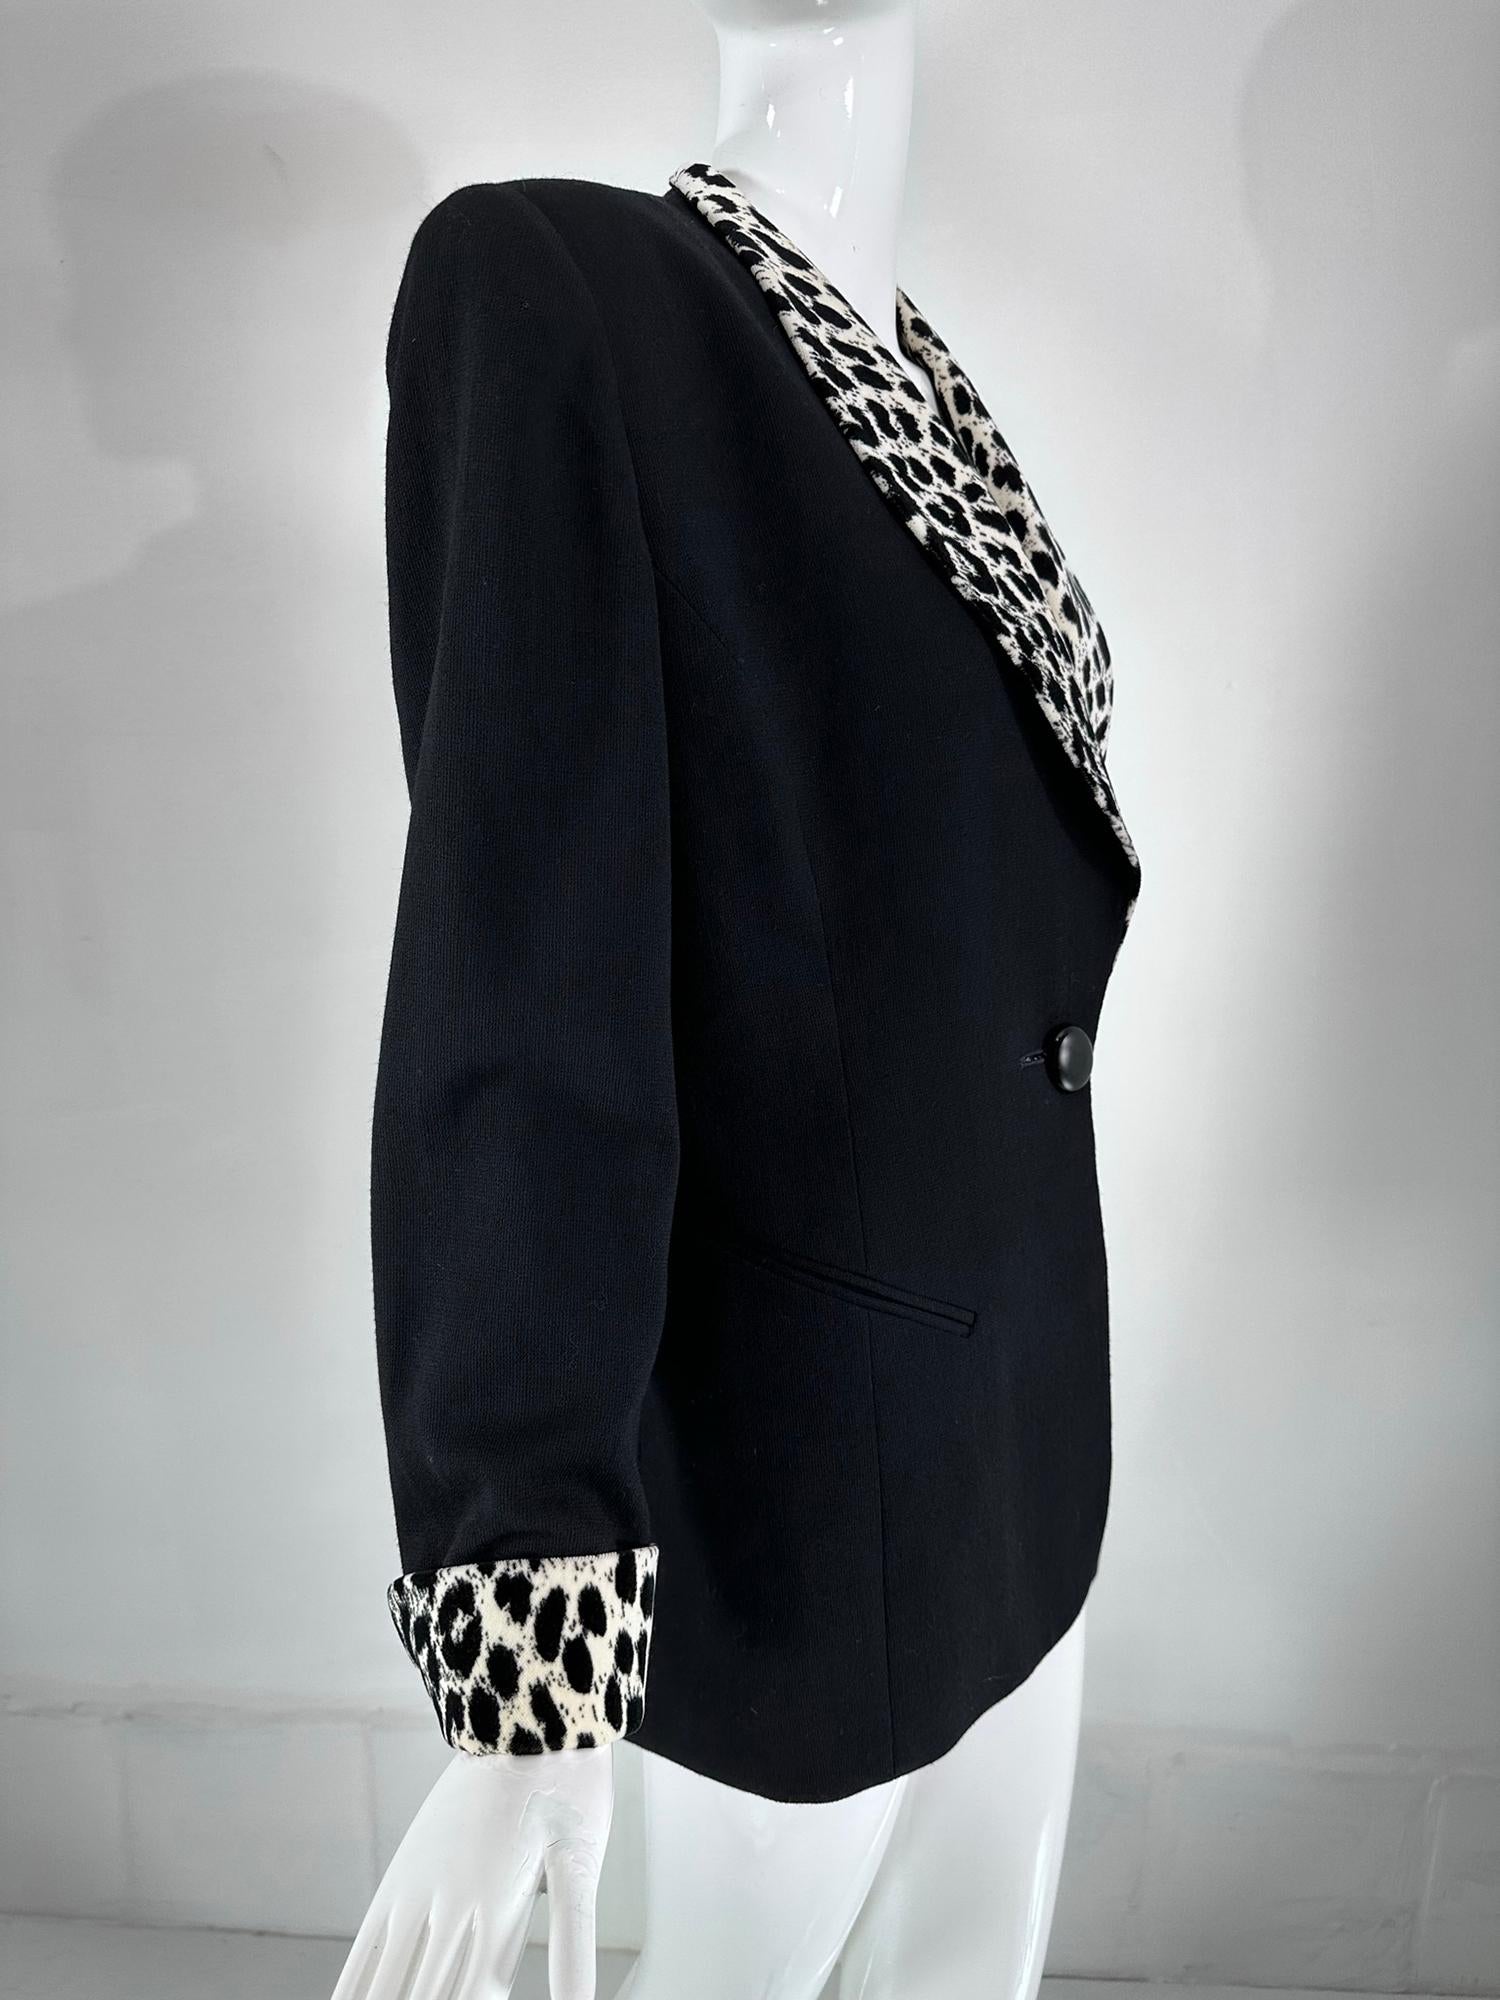 Christian Dior Black Princess Seam Tuxedo Jacket Black White Velvet Lapels 1990s In Good Condition For Sale In West Palm Beach, FL